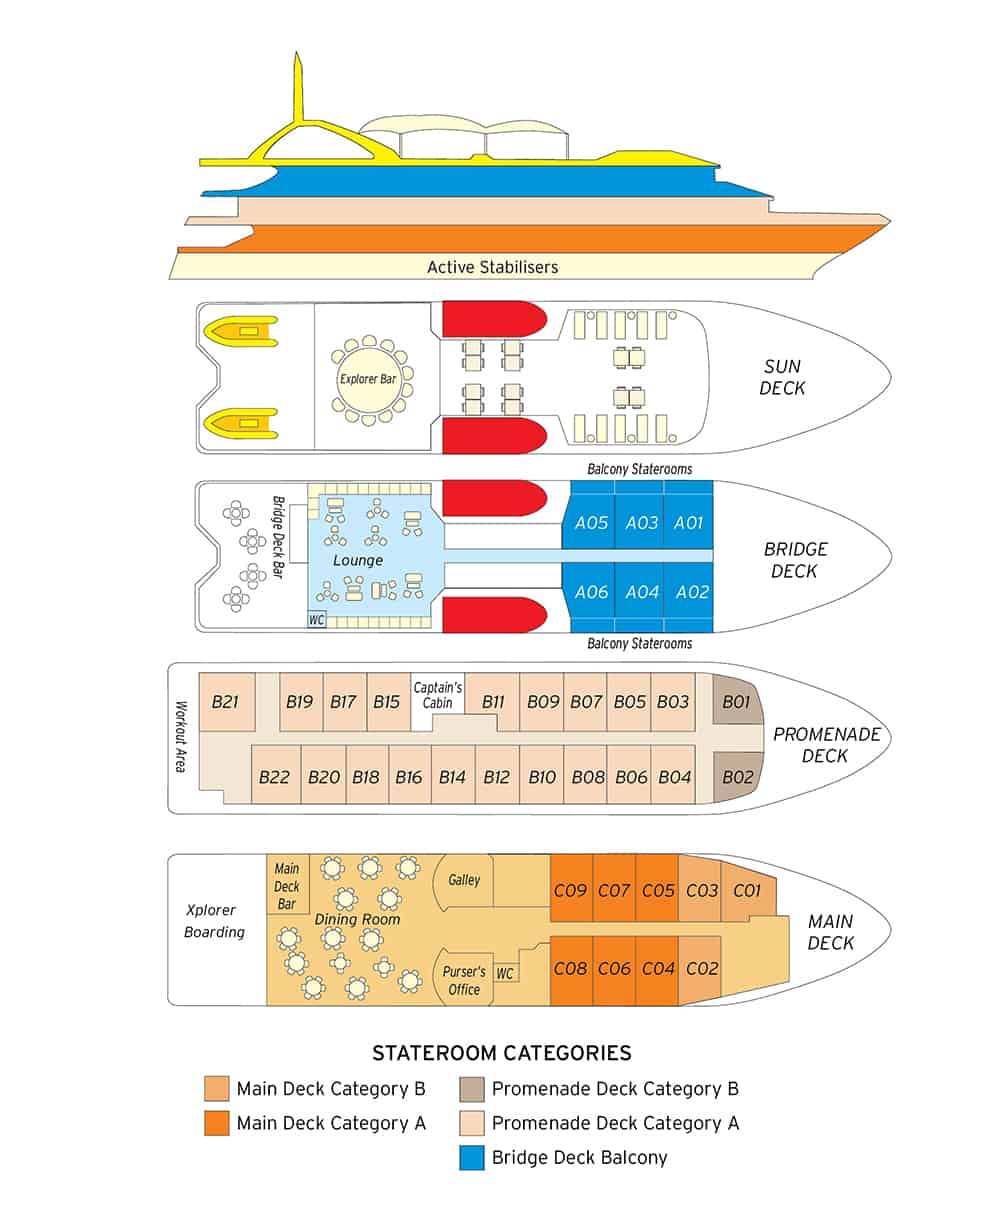 Deck plan for Coral Discoverer showing main, promenade, bridge, and sun decks.